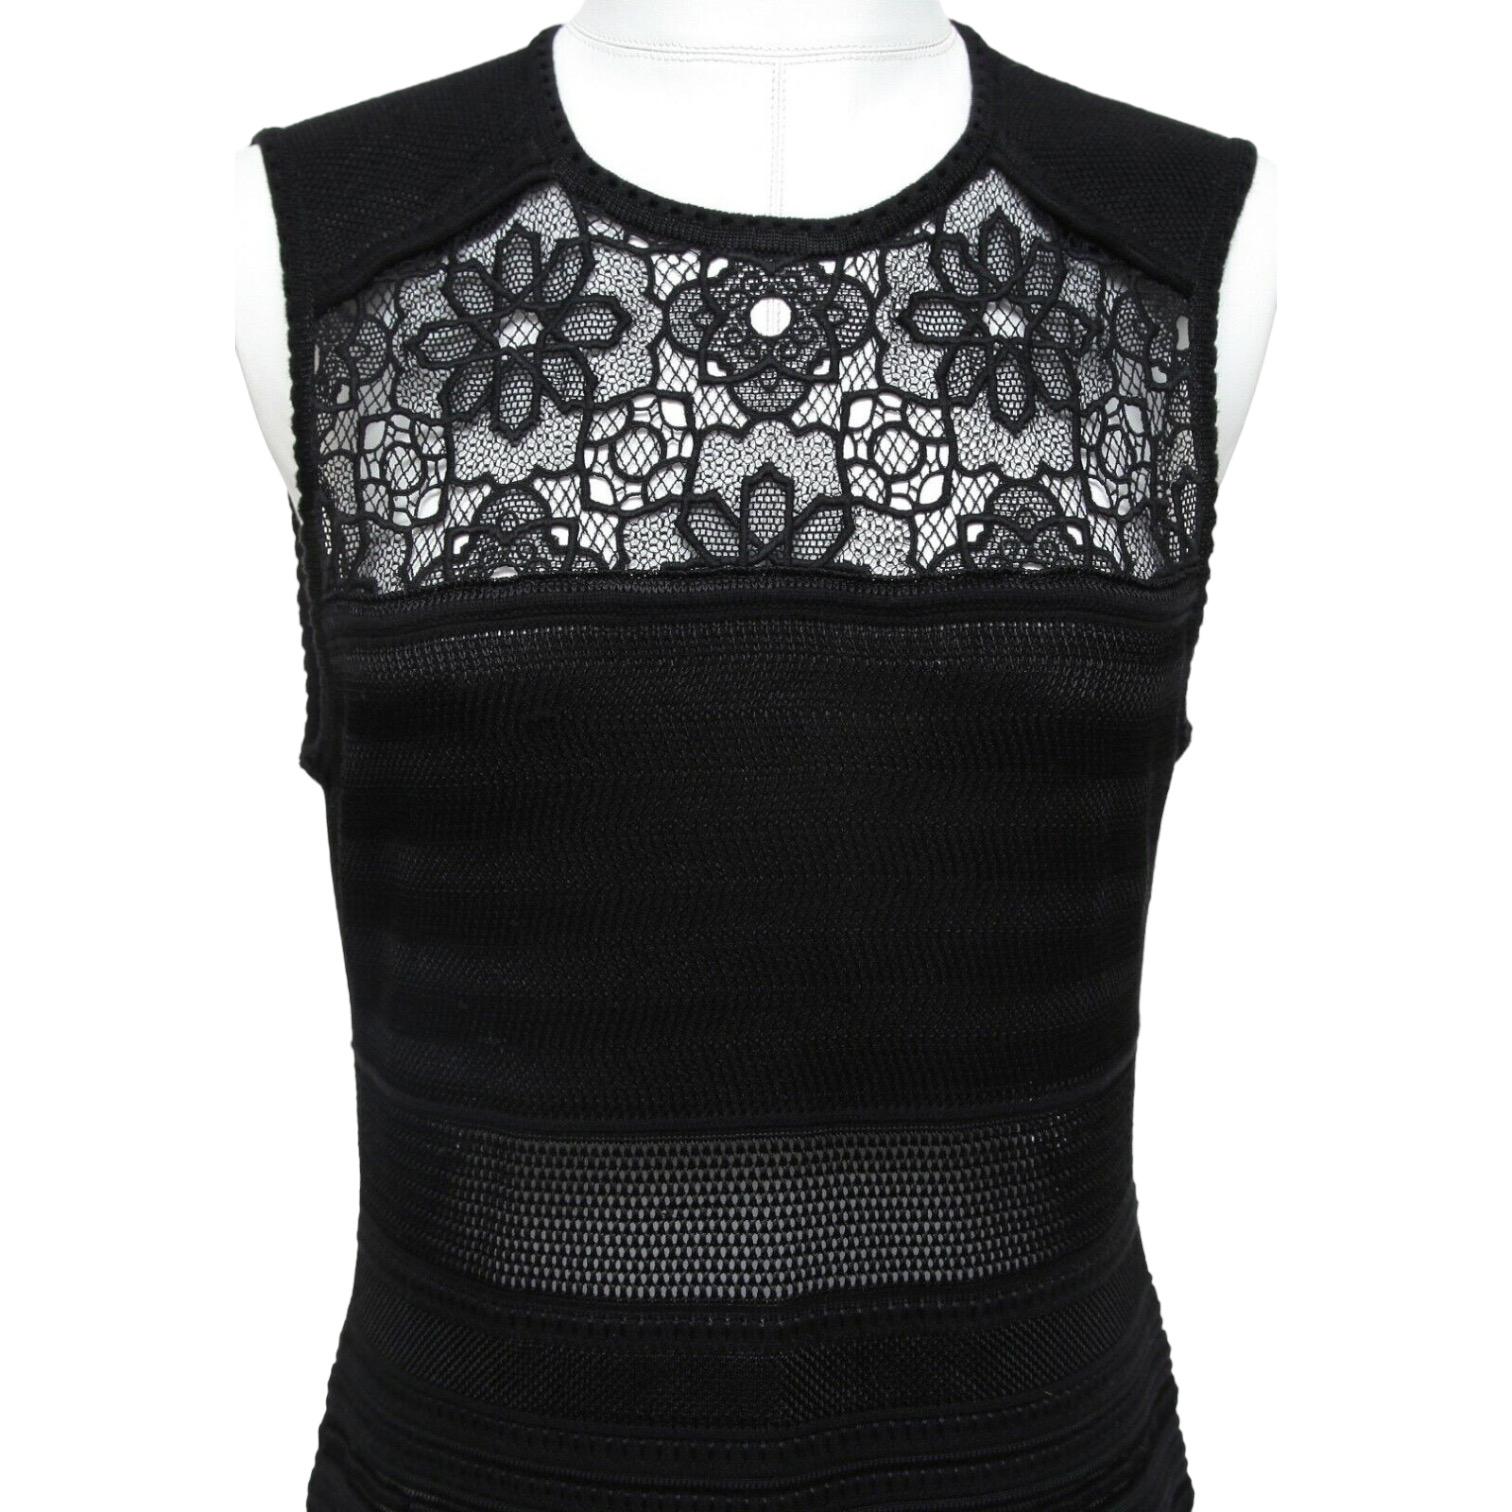 ROBERTO CAVALLI Black Knit Dress Sleeveless Viscose Elastane Slip-On Sz 44 In Good Condition For Sale In Hollywood, FL